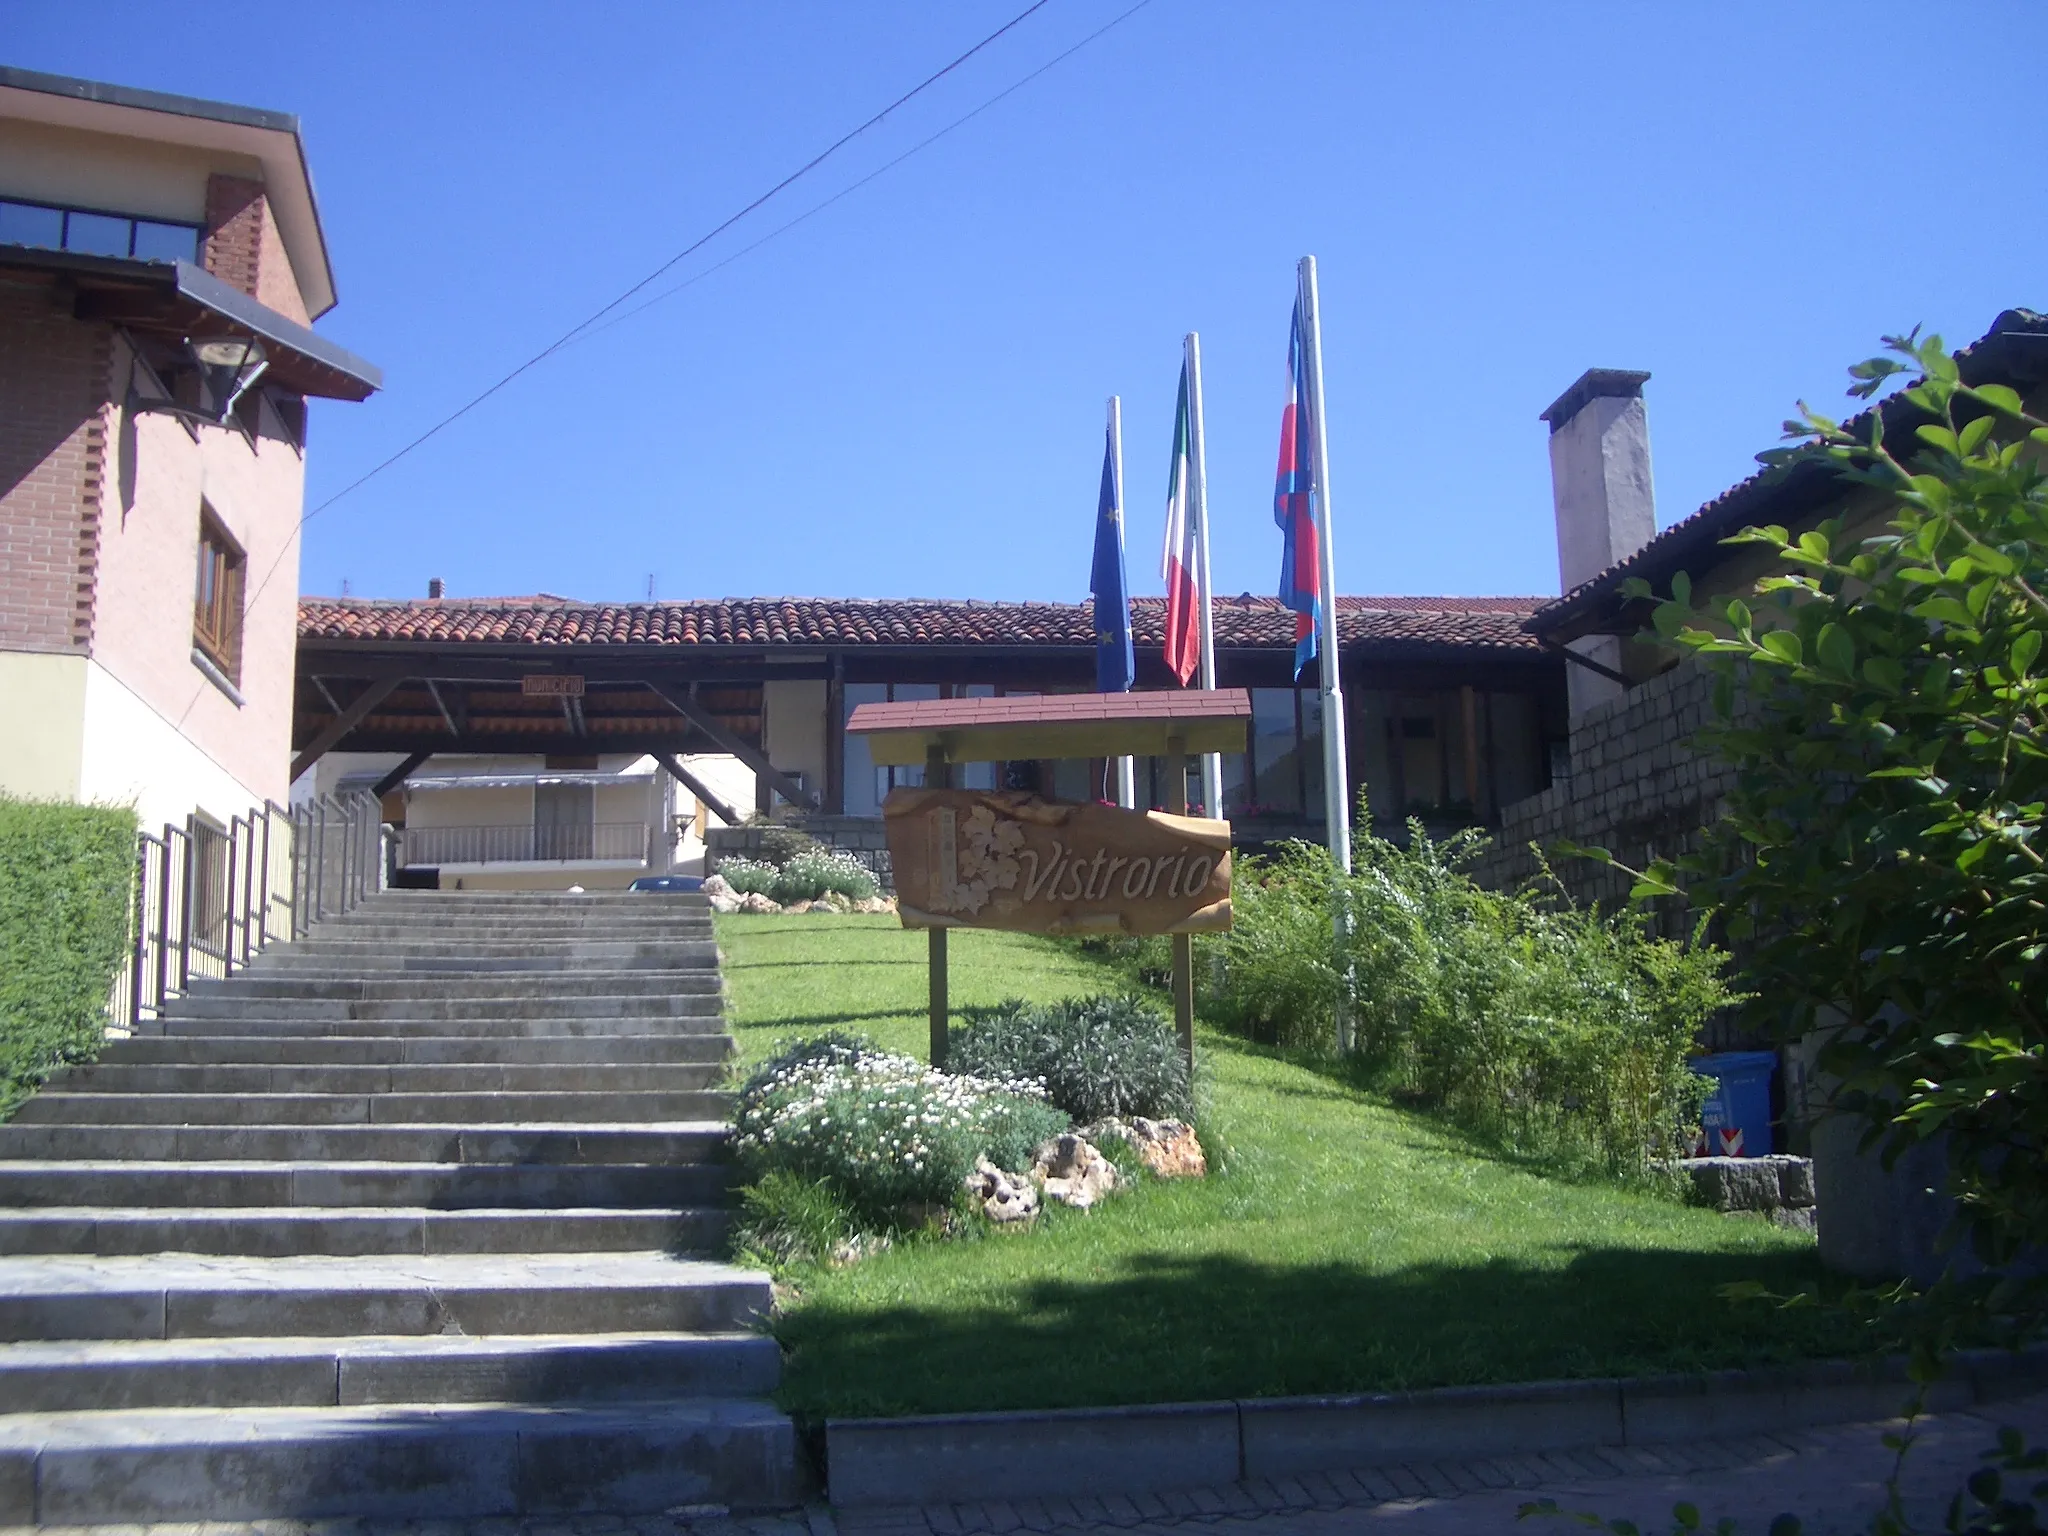 Photo showing: Vistrorio, Town-Hall